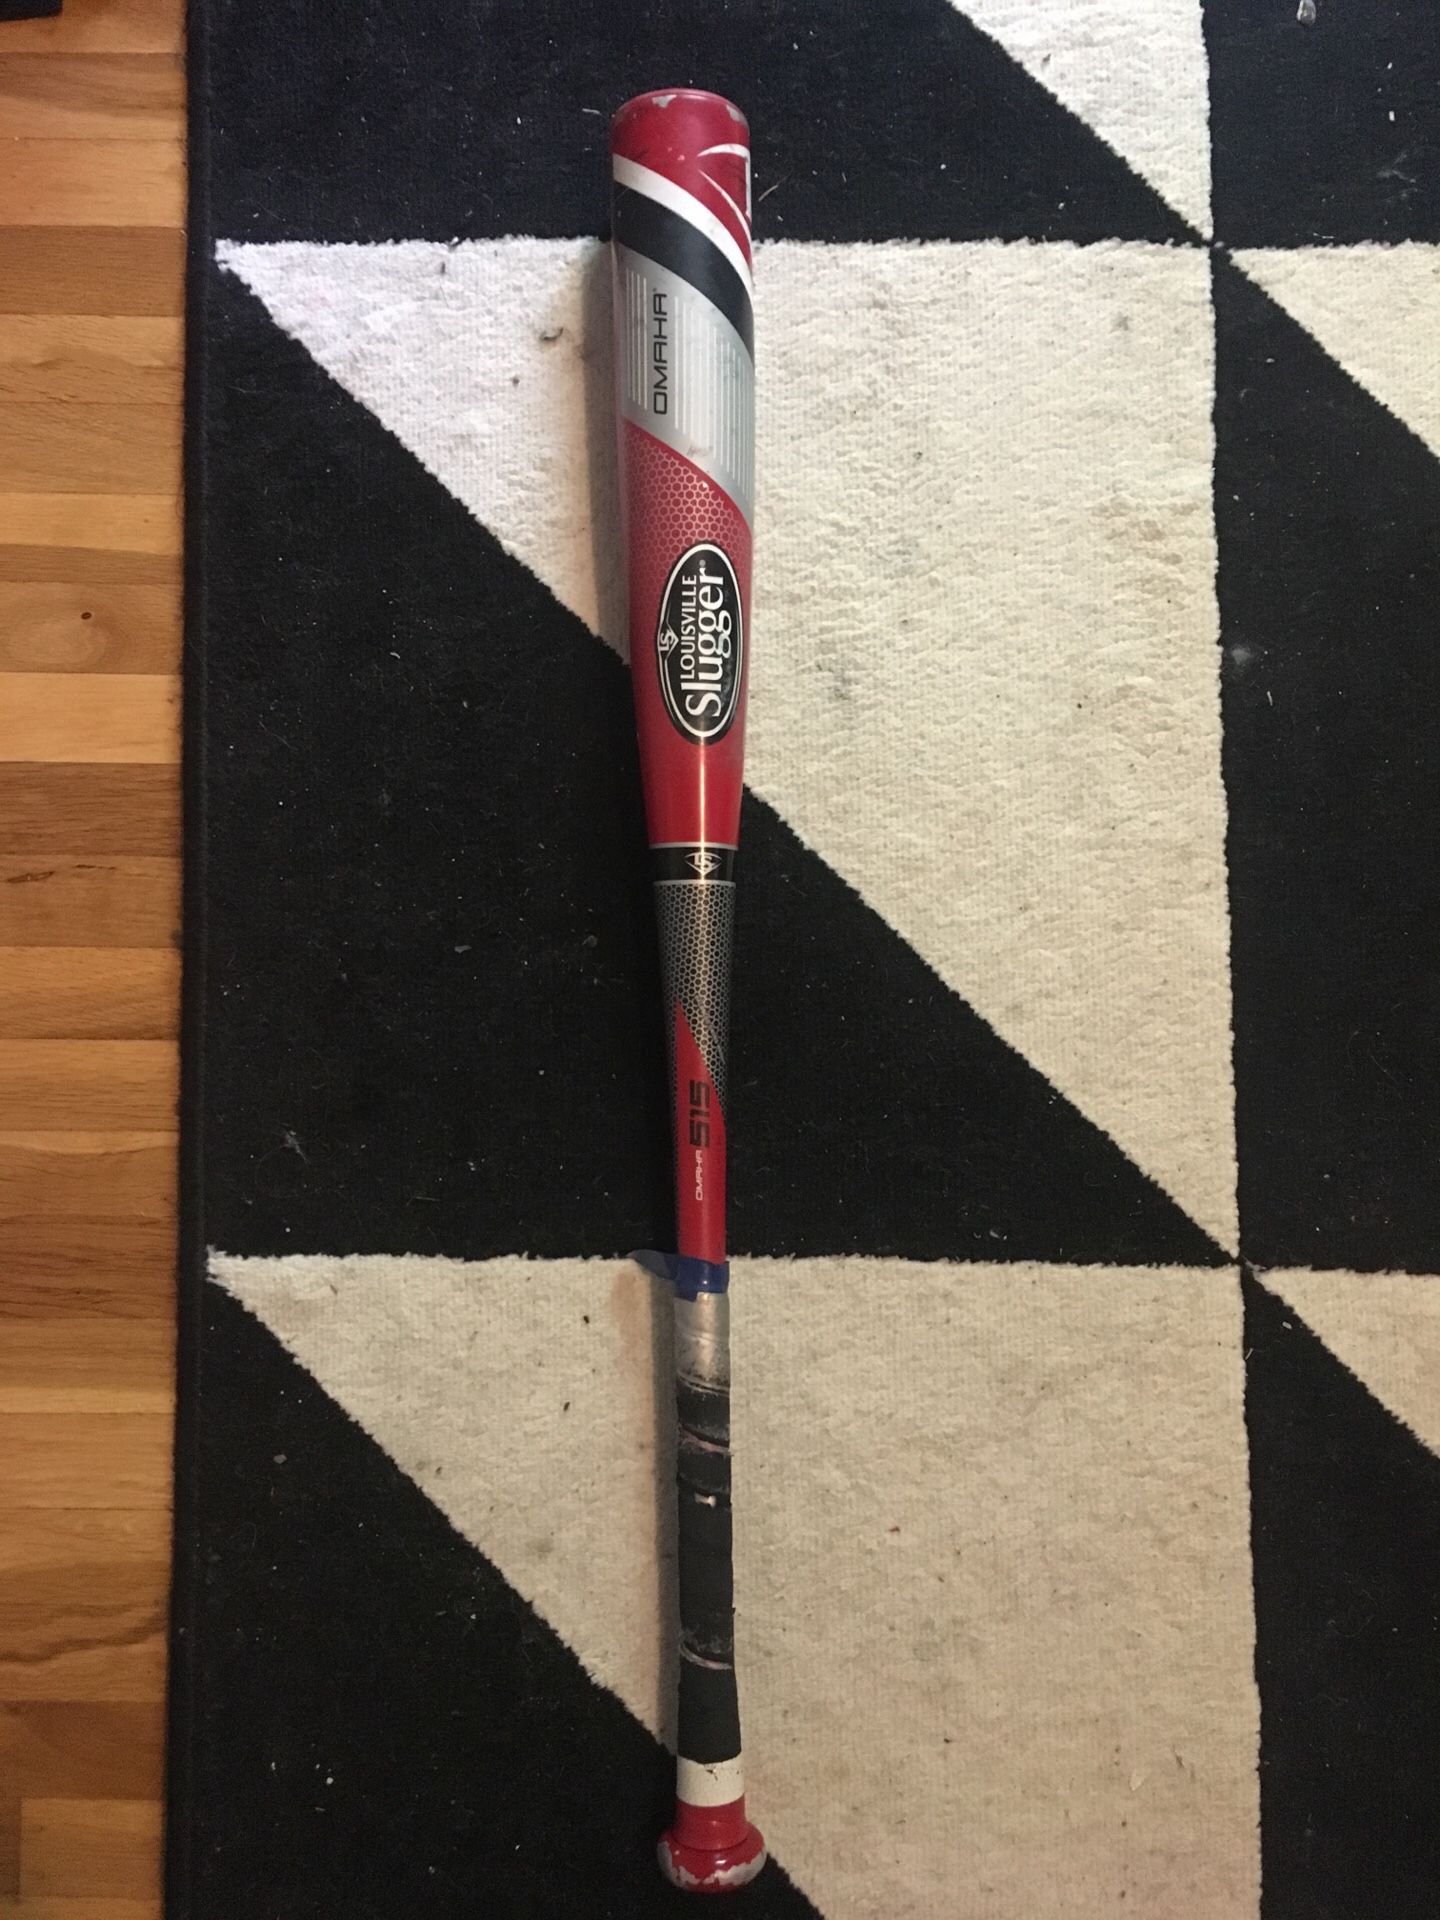 Louisville Slugger Omaha baseball bat